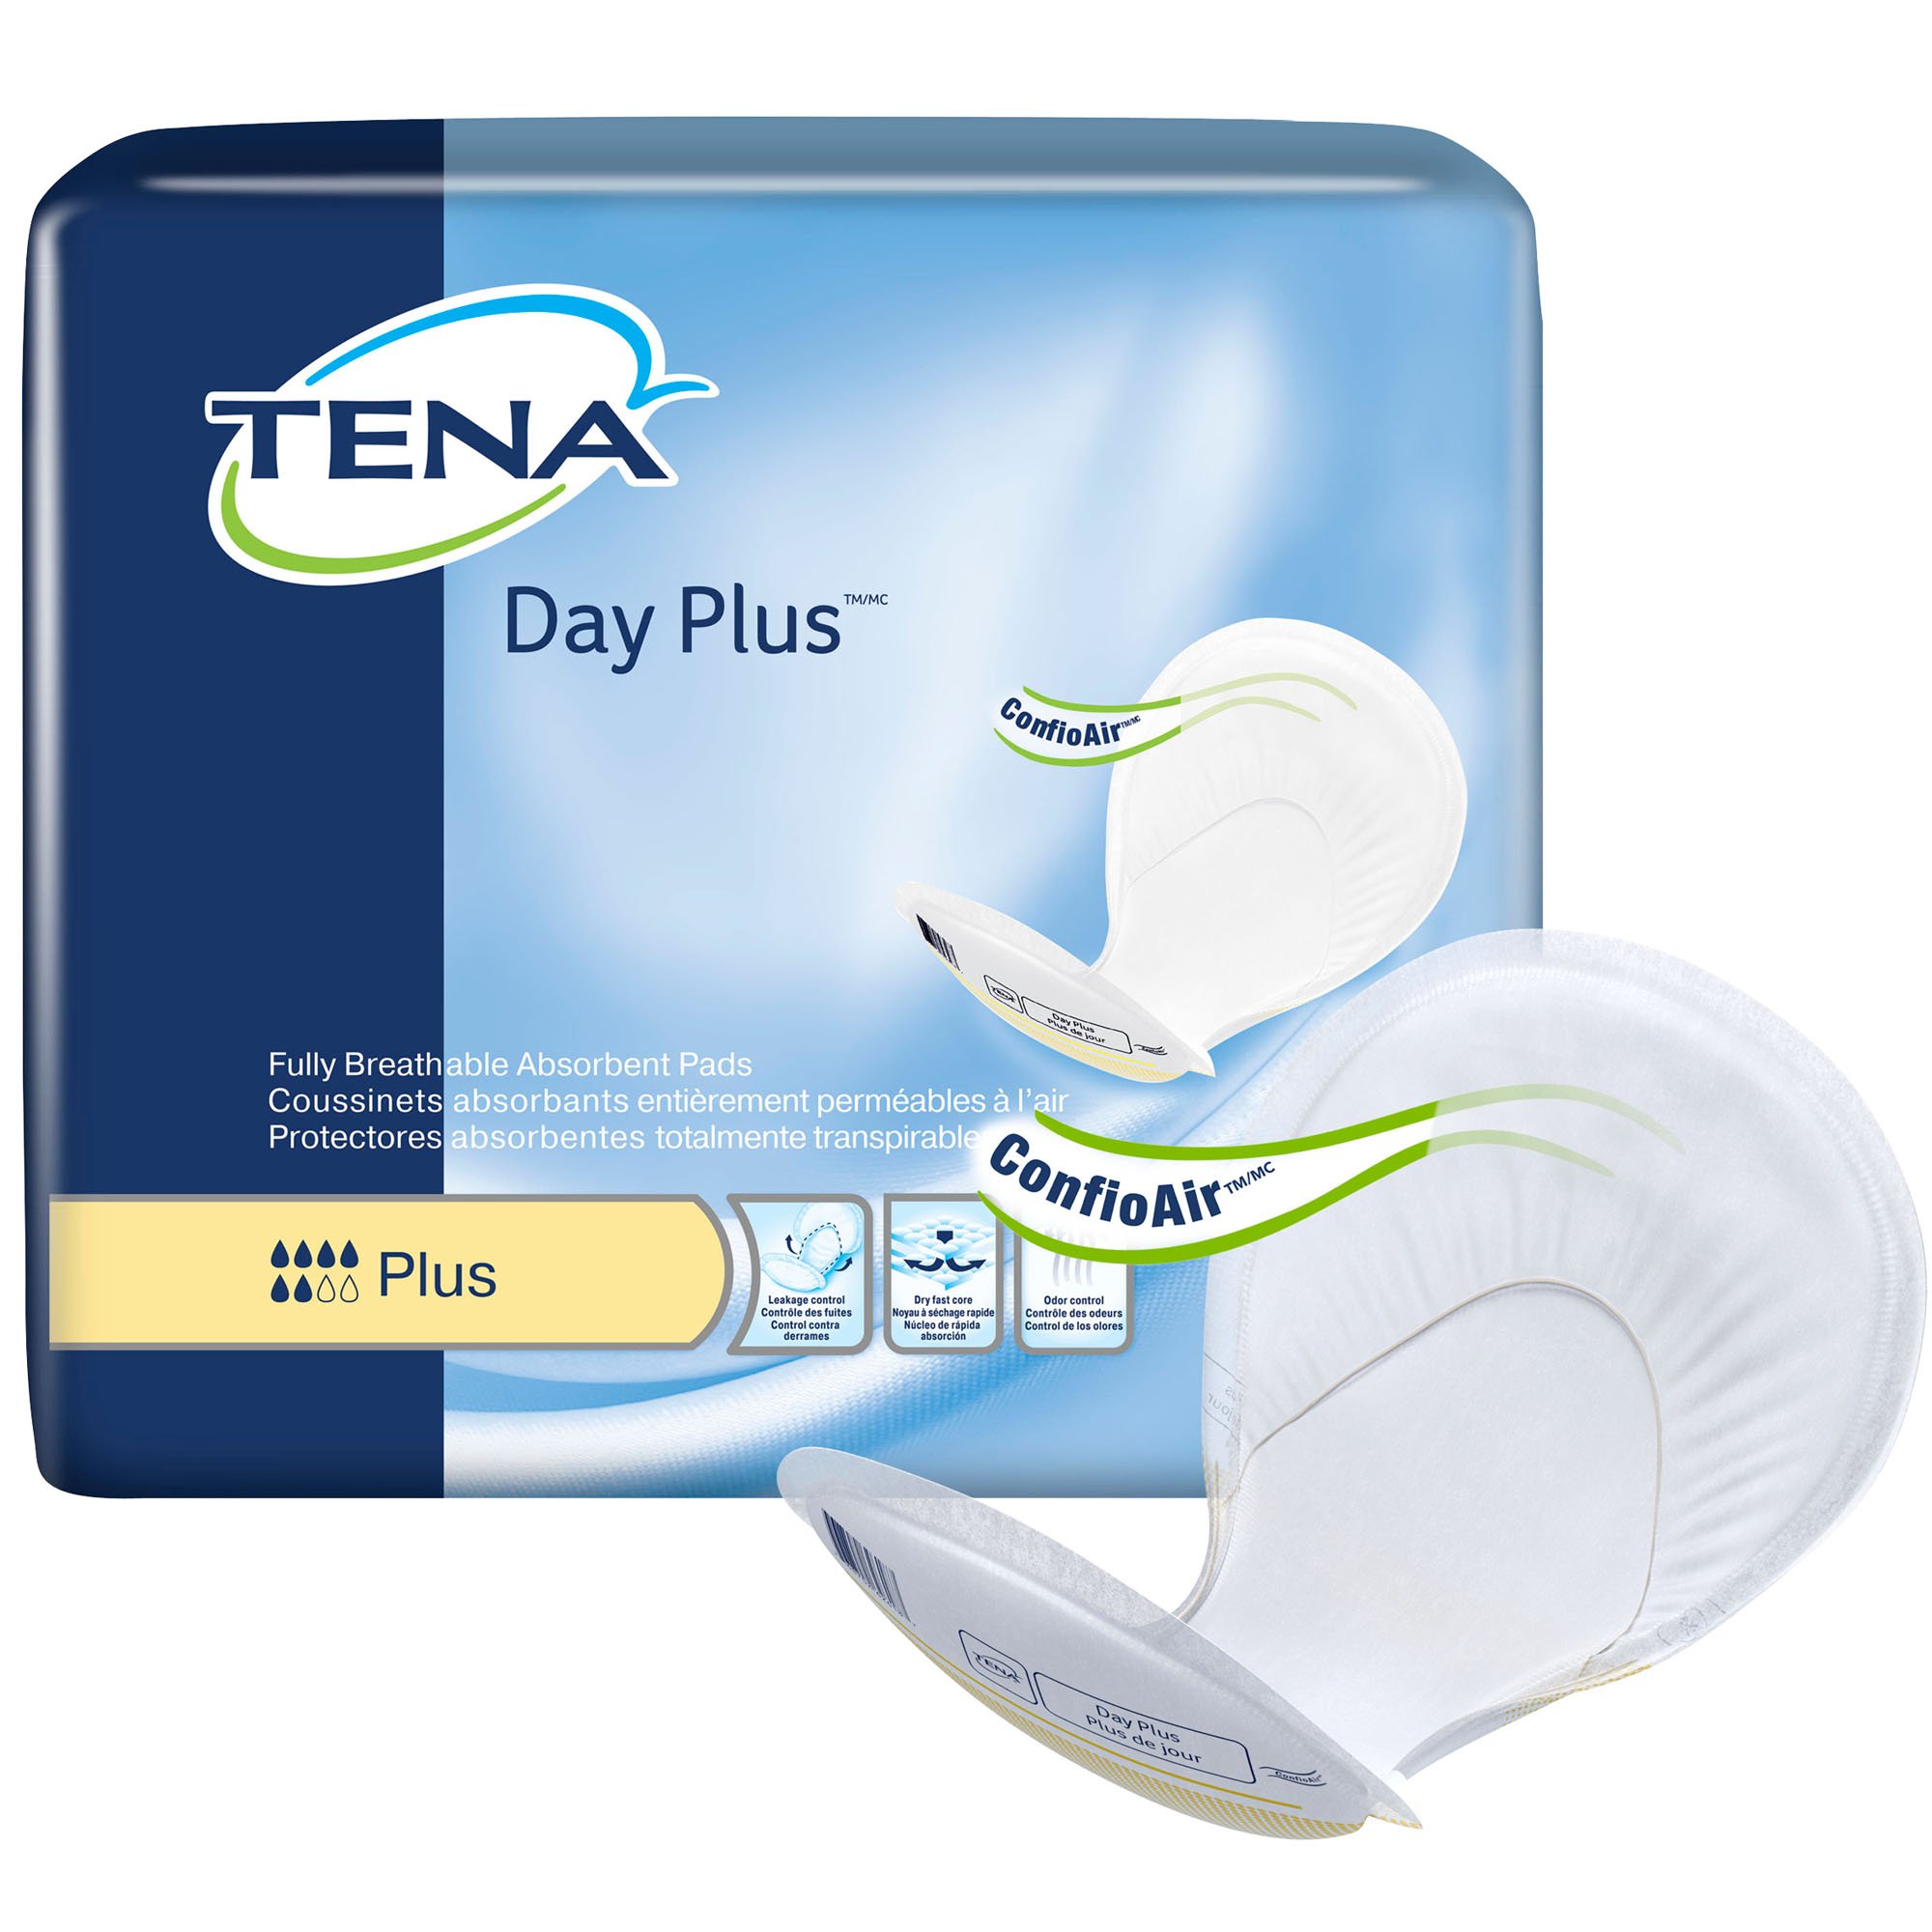 Tena Day Plus Bladder Control Pad, 24-Inch Length